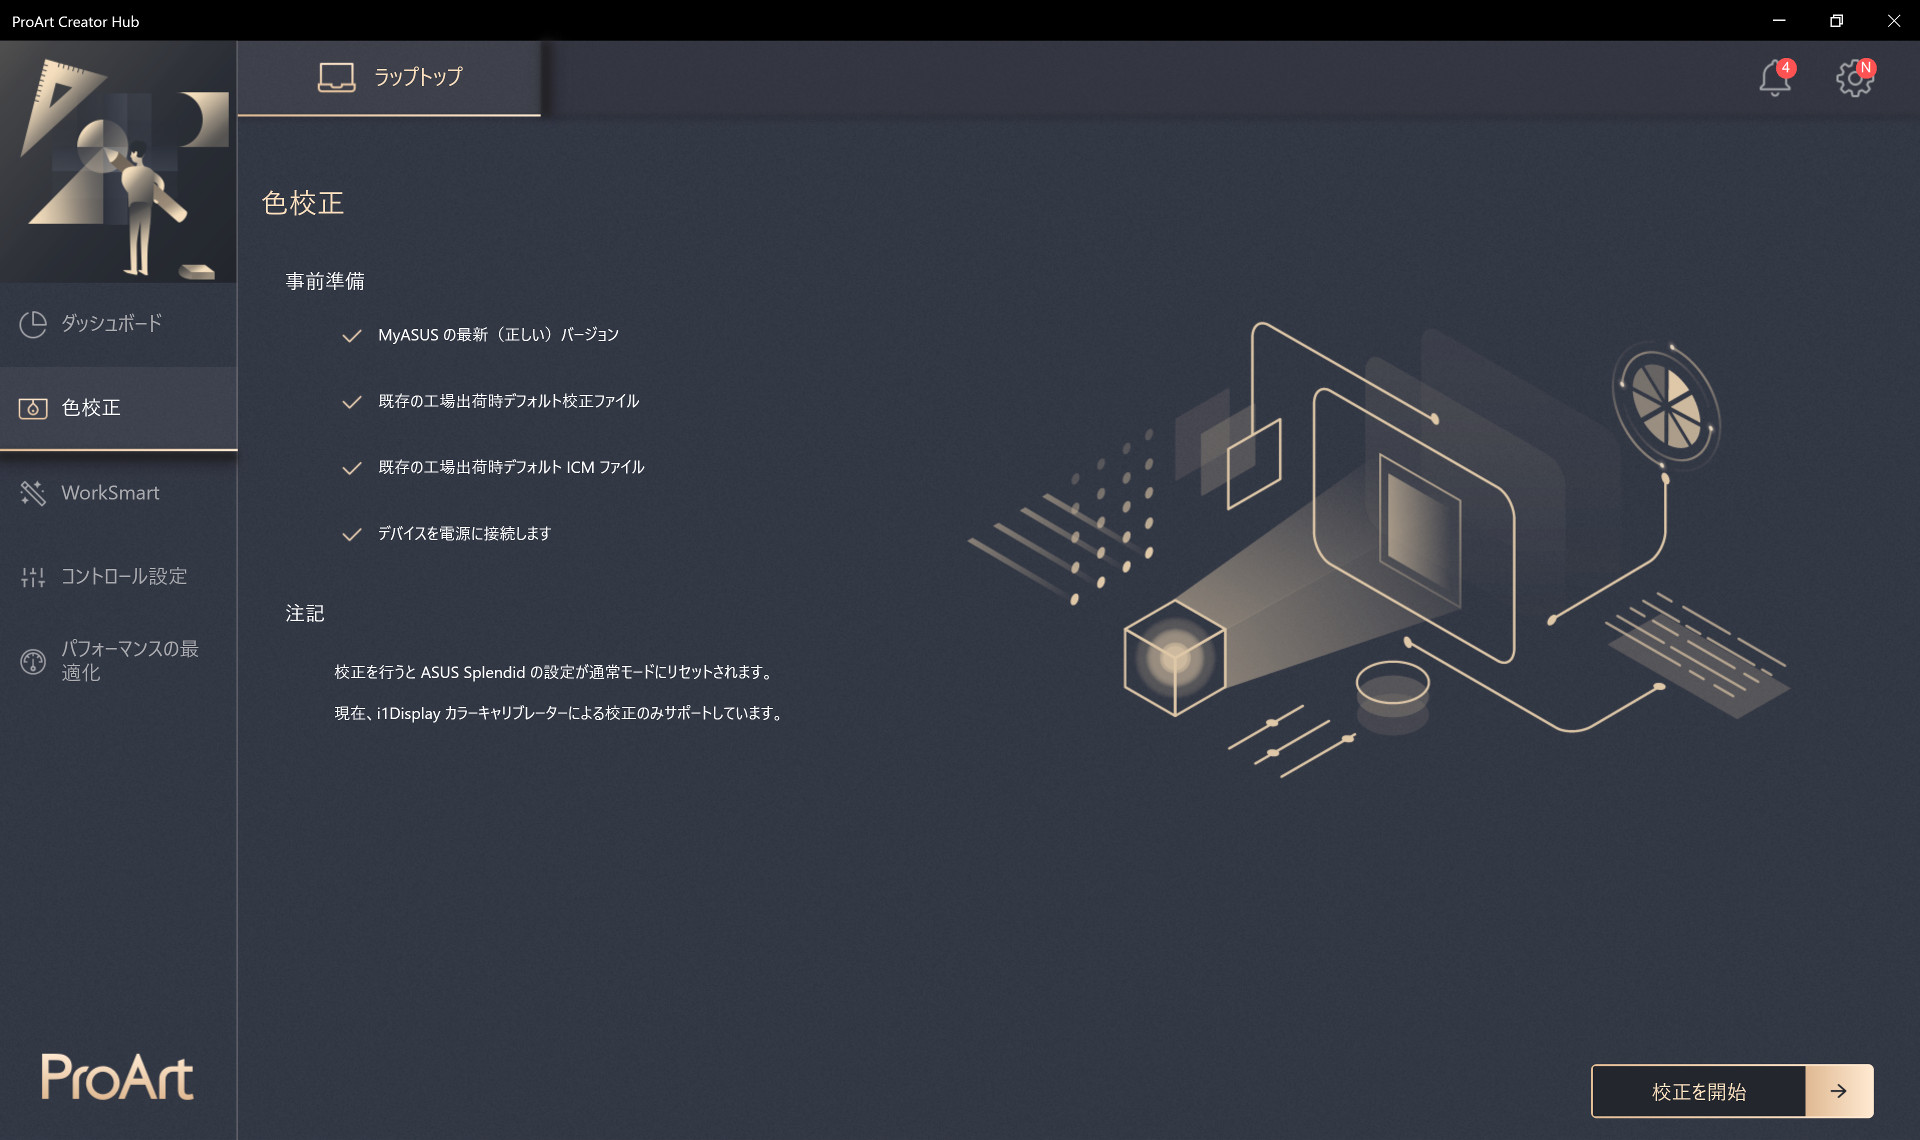 ASUS ZenBook Pro 16X ProArt Creator Hub